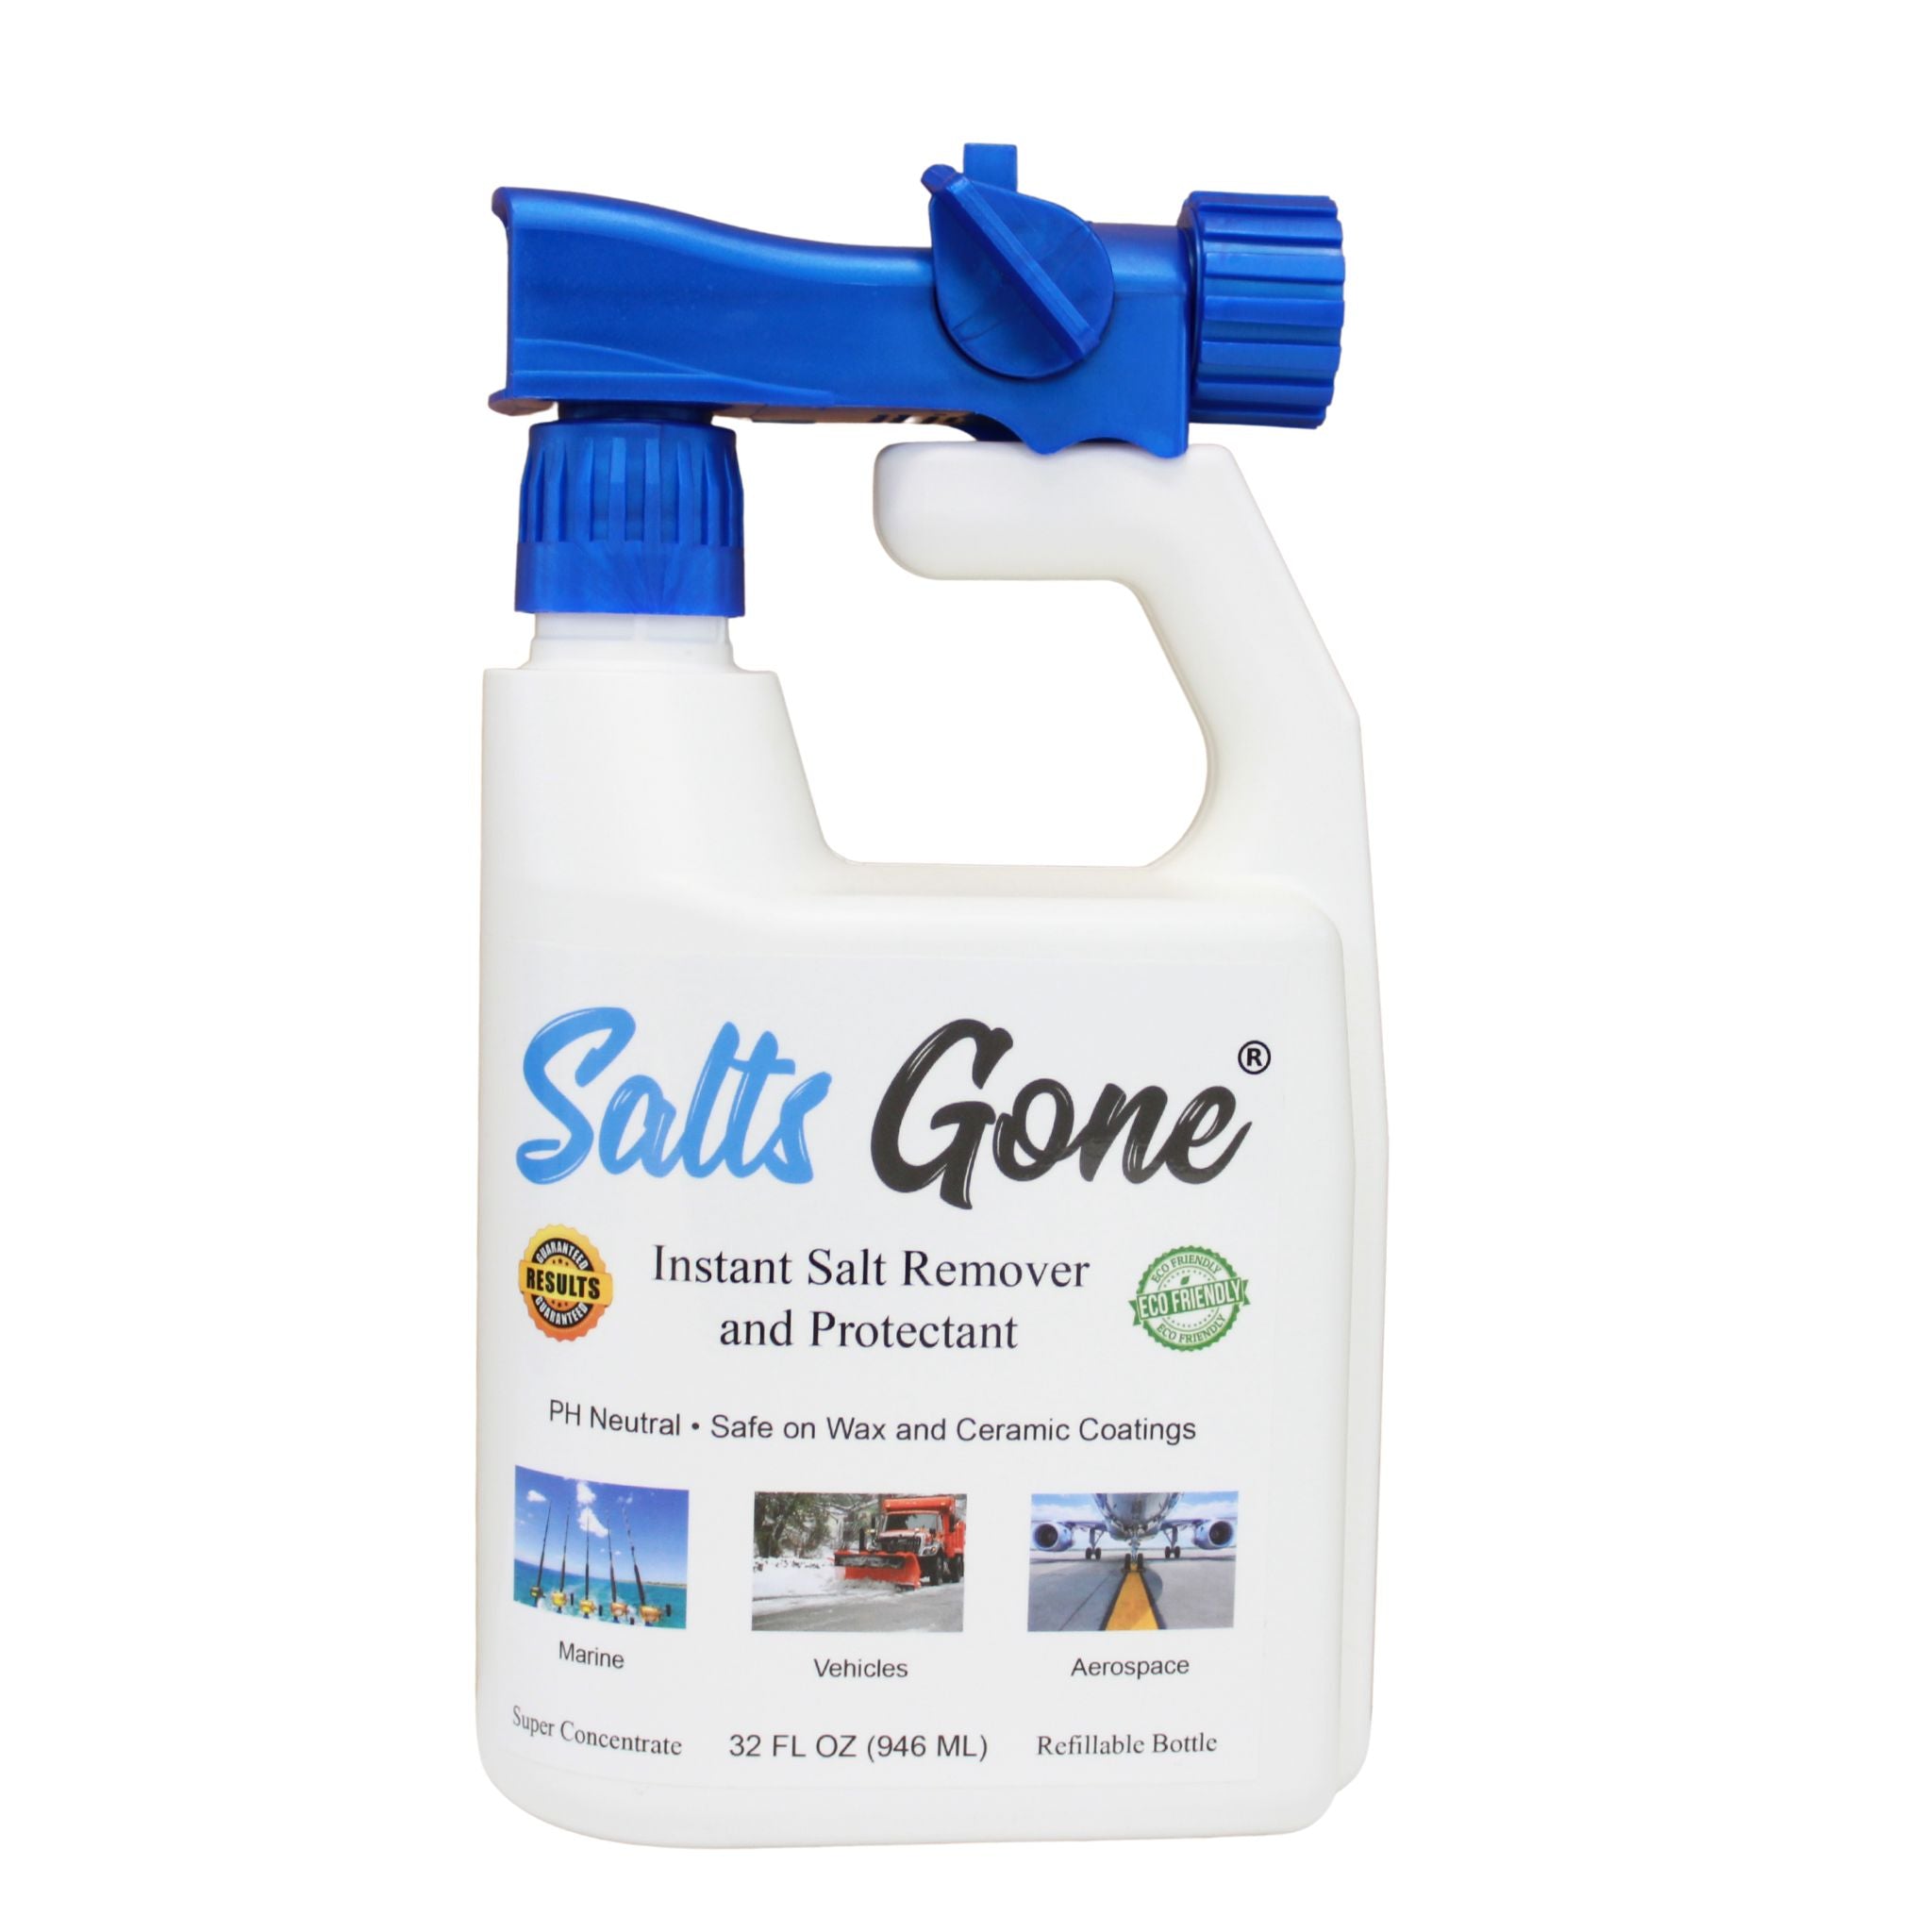 Salt Away Concentrate 1 Gallon